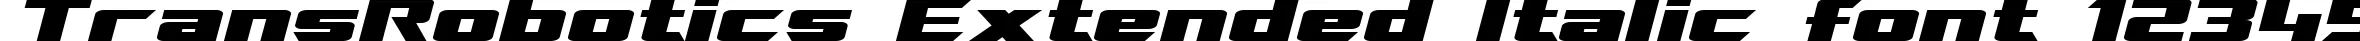 Dynamic TransRobotics Extended Italic Font Preview https://safirsoft.com